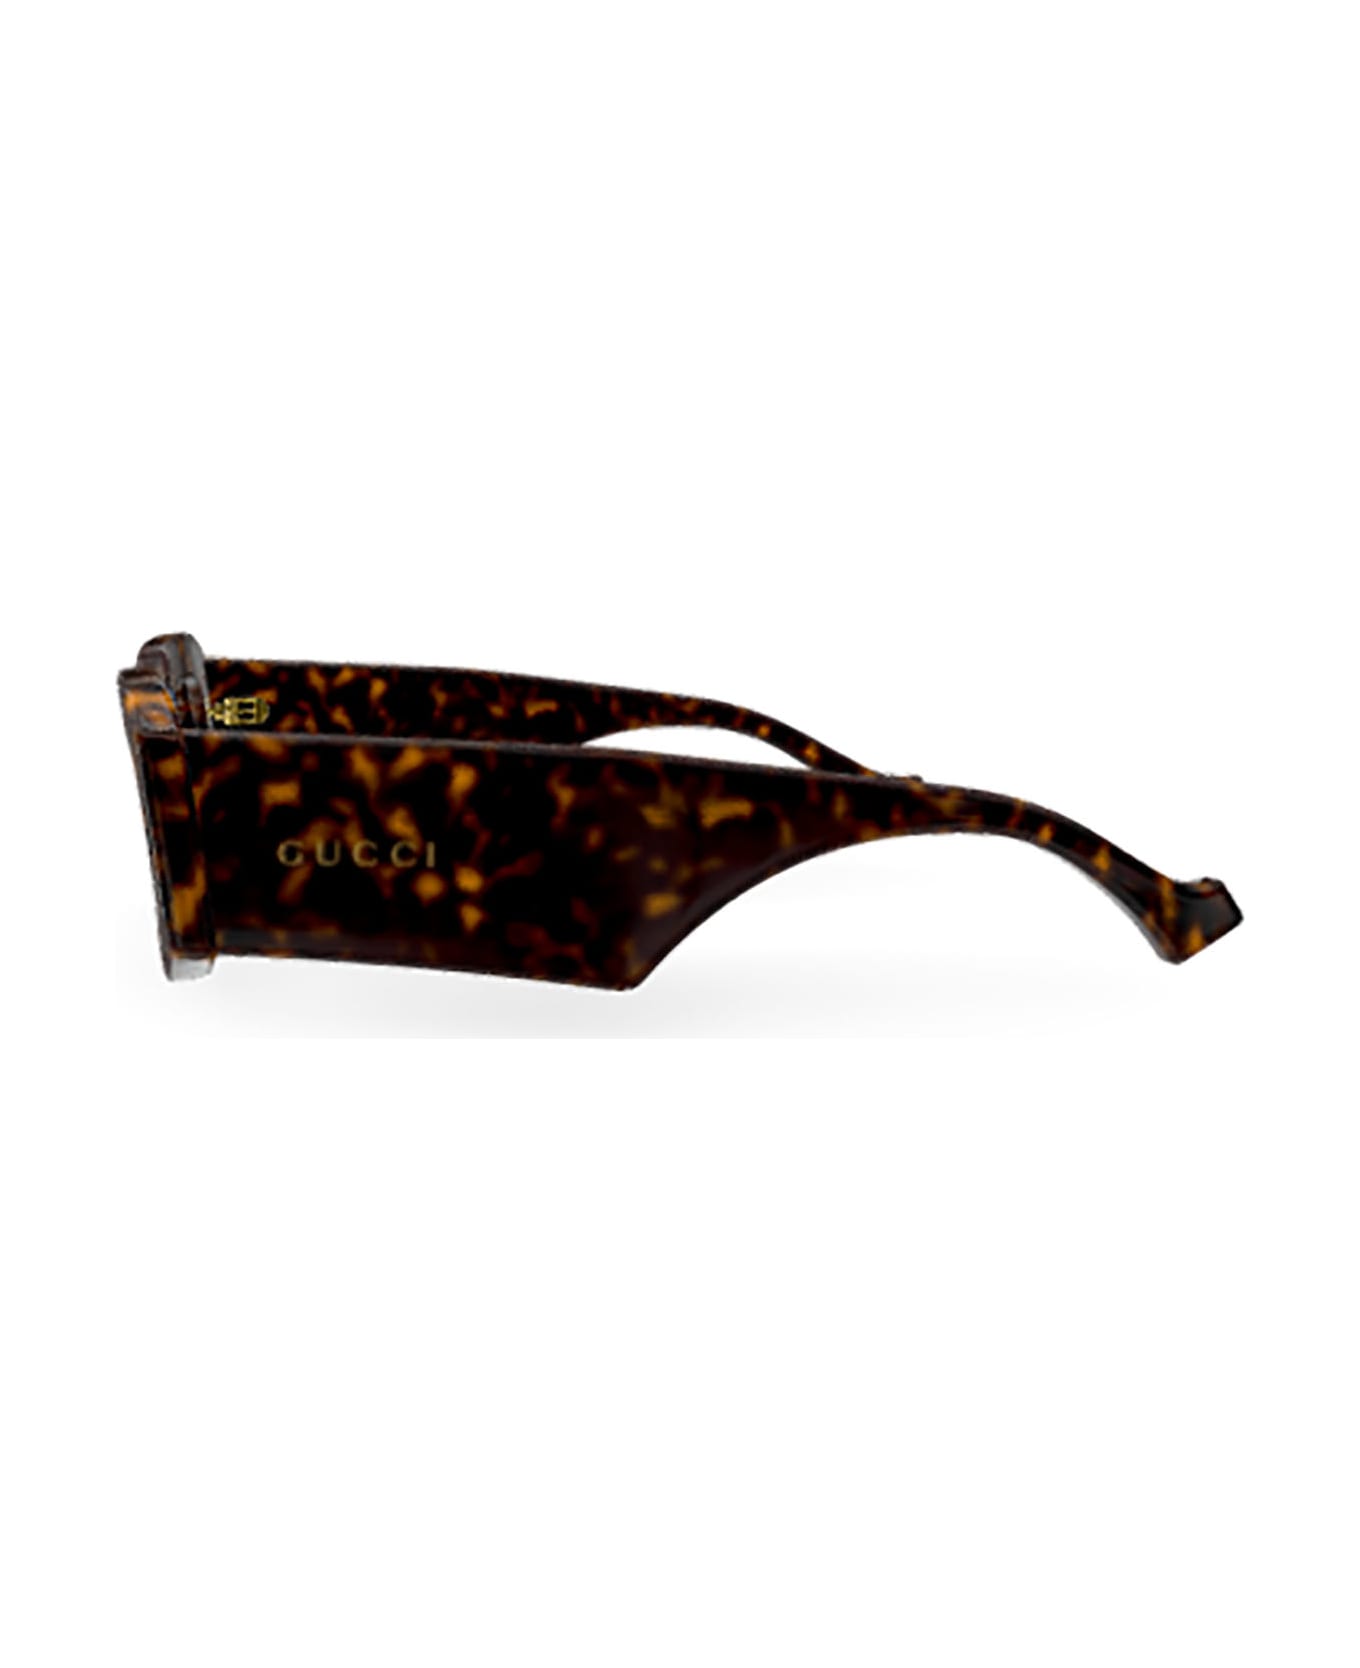 Gucci Eyewear GG1426S Sunglasses - Havana Havana Brown